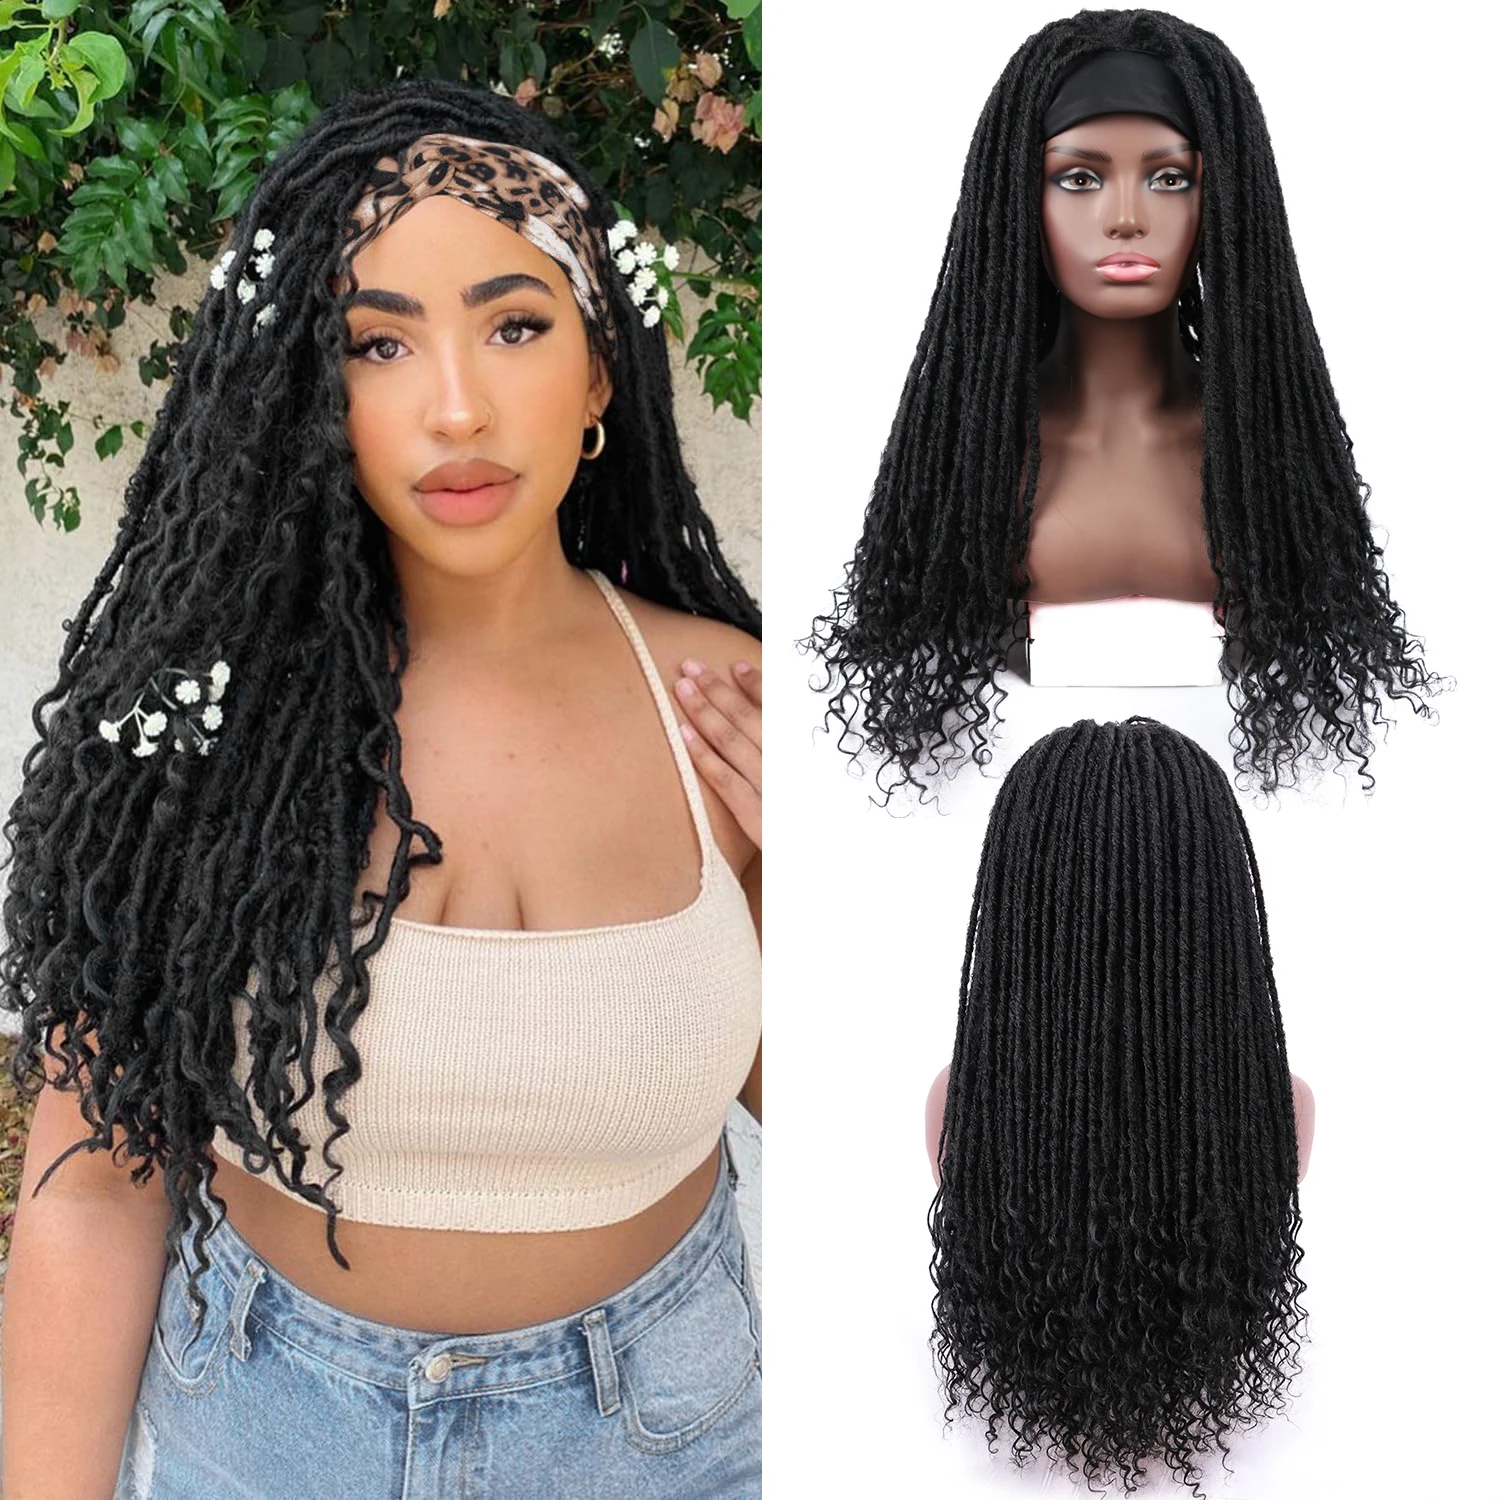 

Goddess Locs Wig Dreadlock Braided Headband Wigs Synthetic Goddess Faux Nu Locs Curly Wig Freetress Twist Crochet Hair For Women